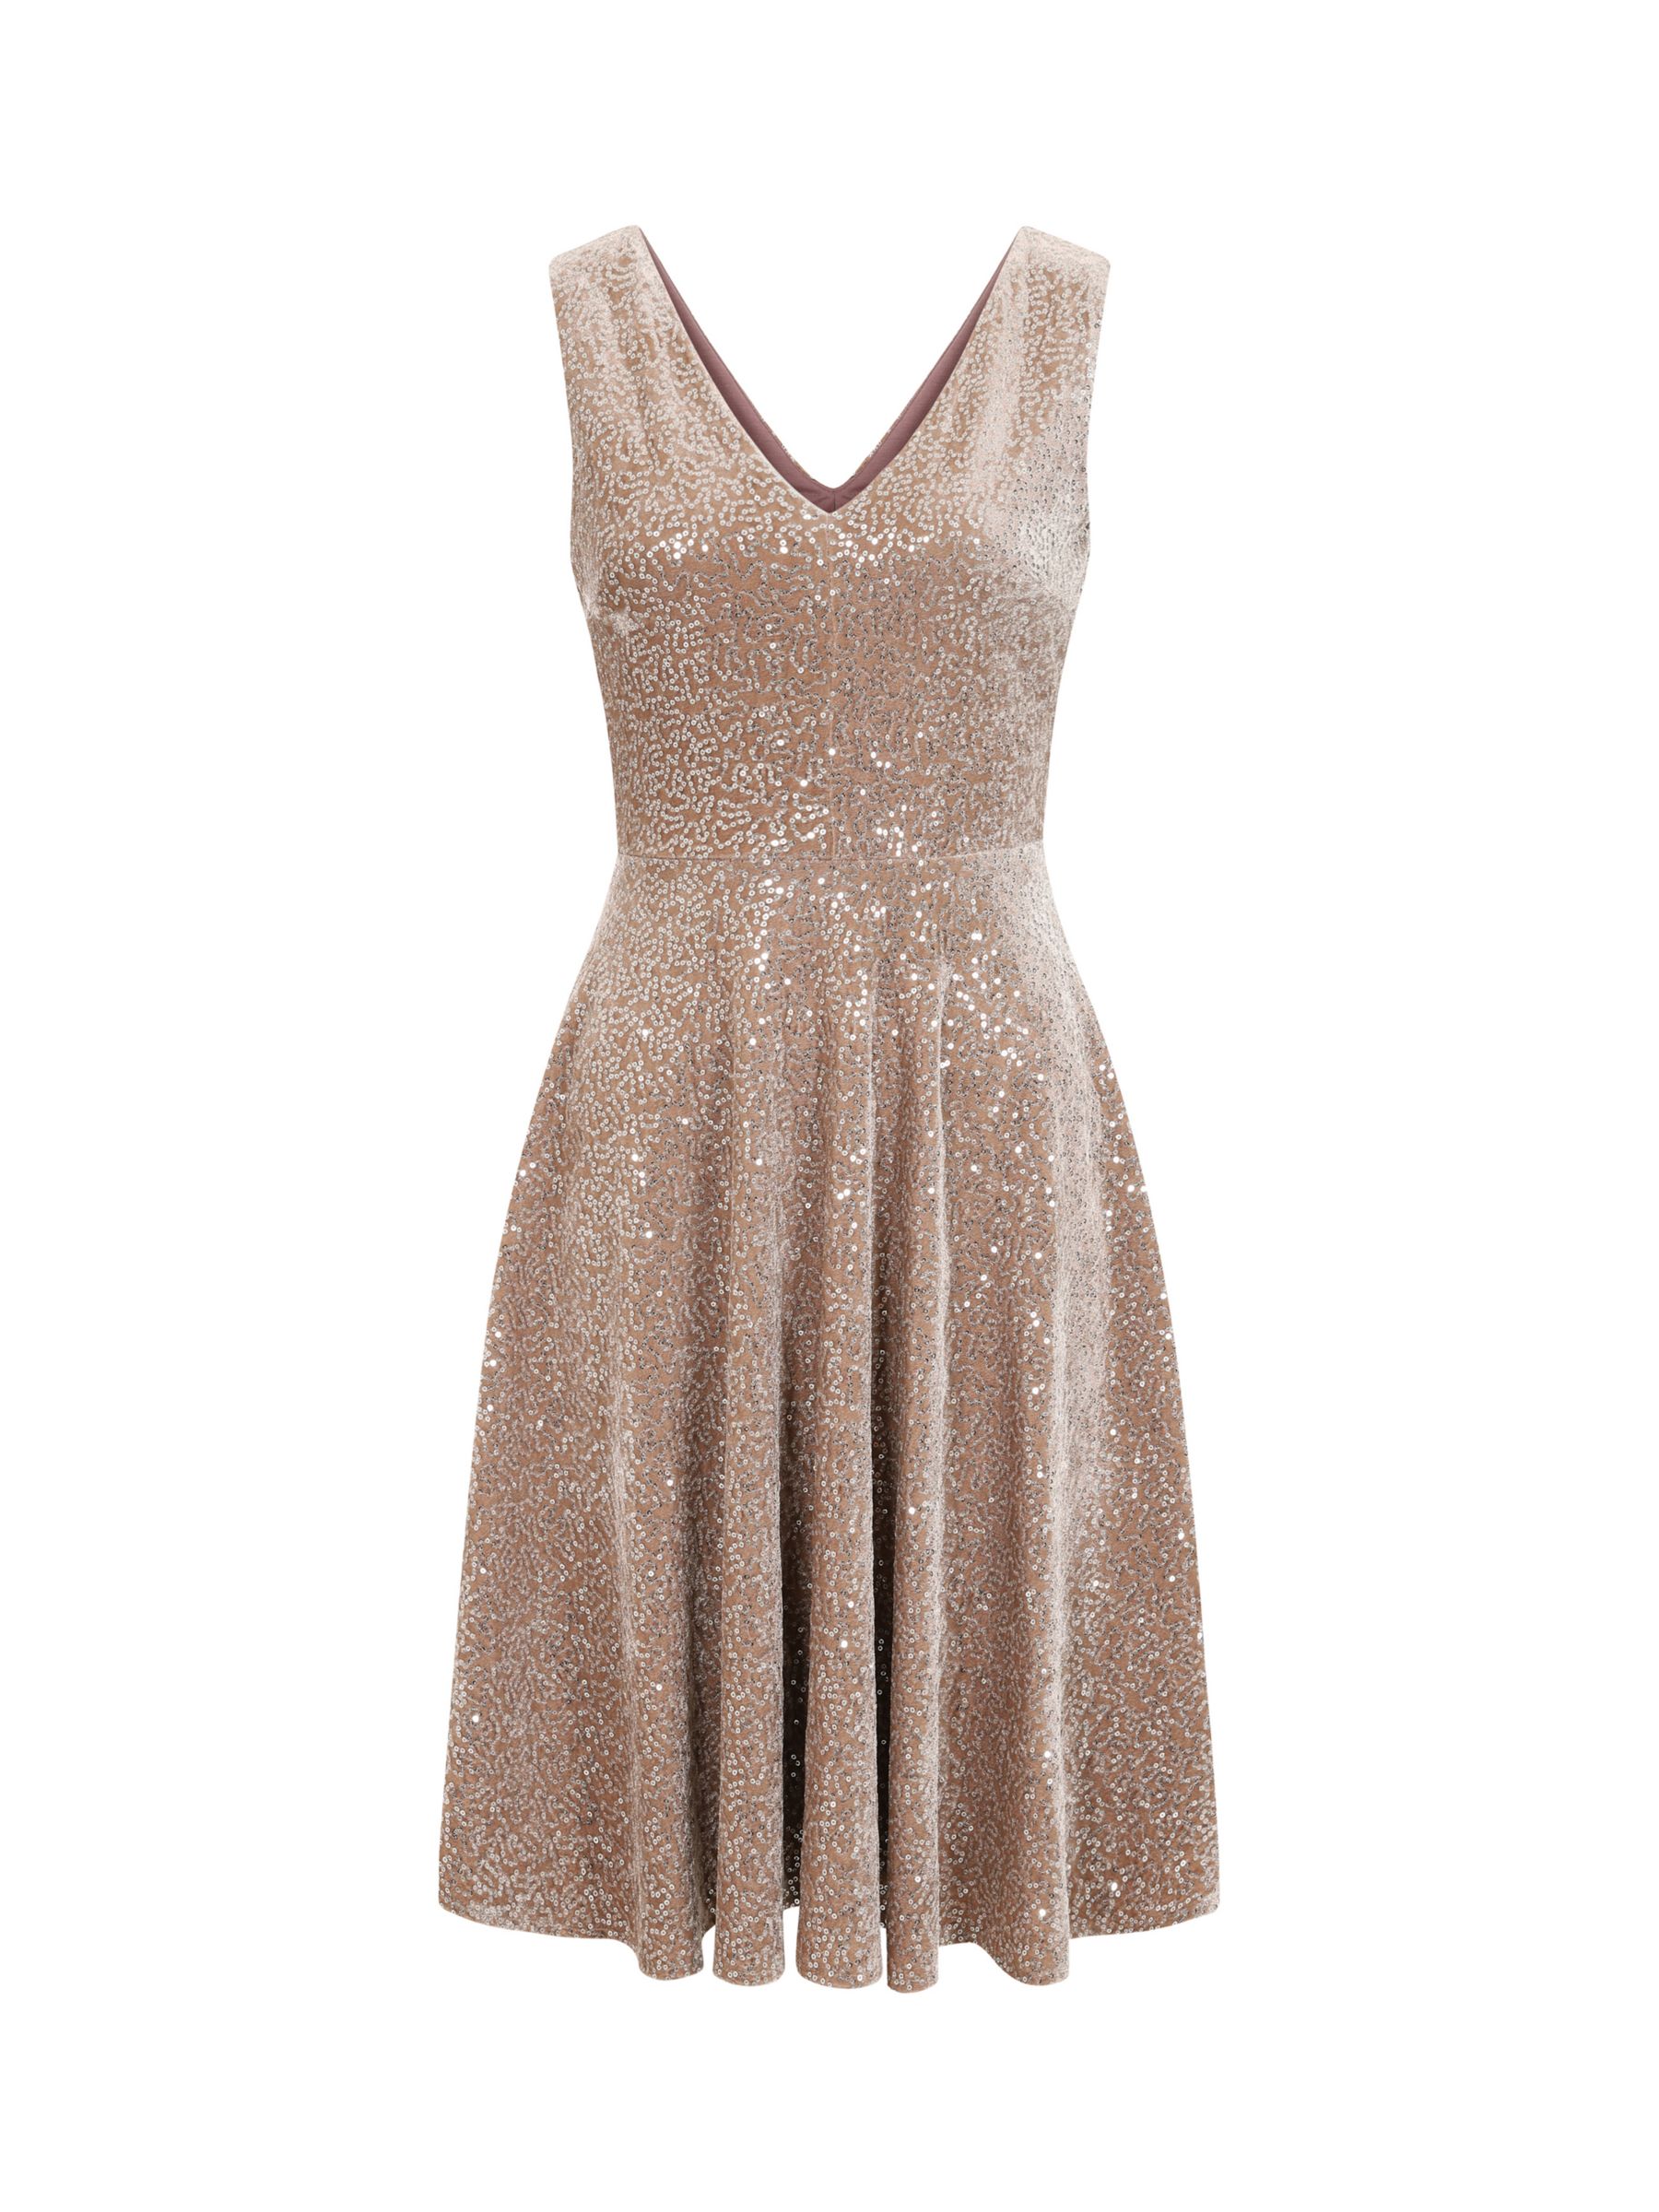 HotSquash Sequin Velvet Dress, Cream/Silver, 8